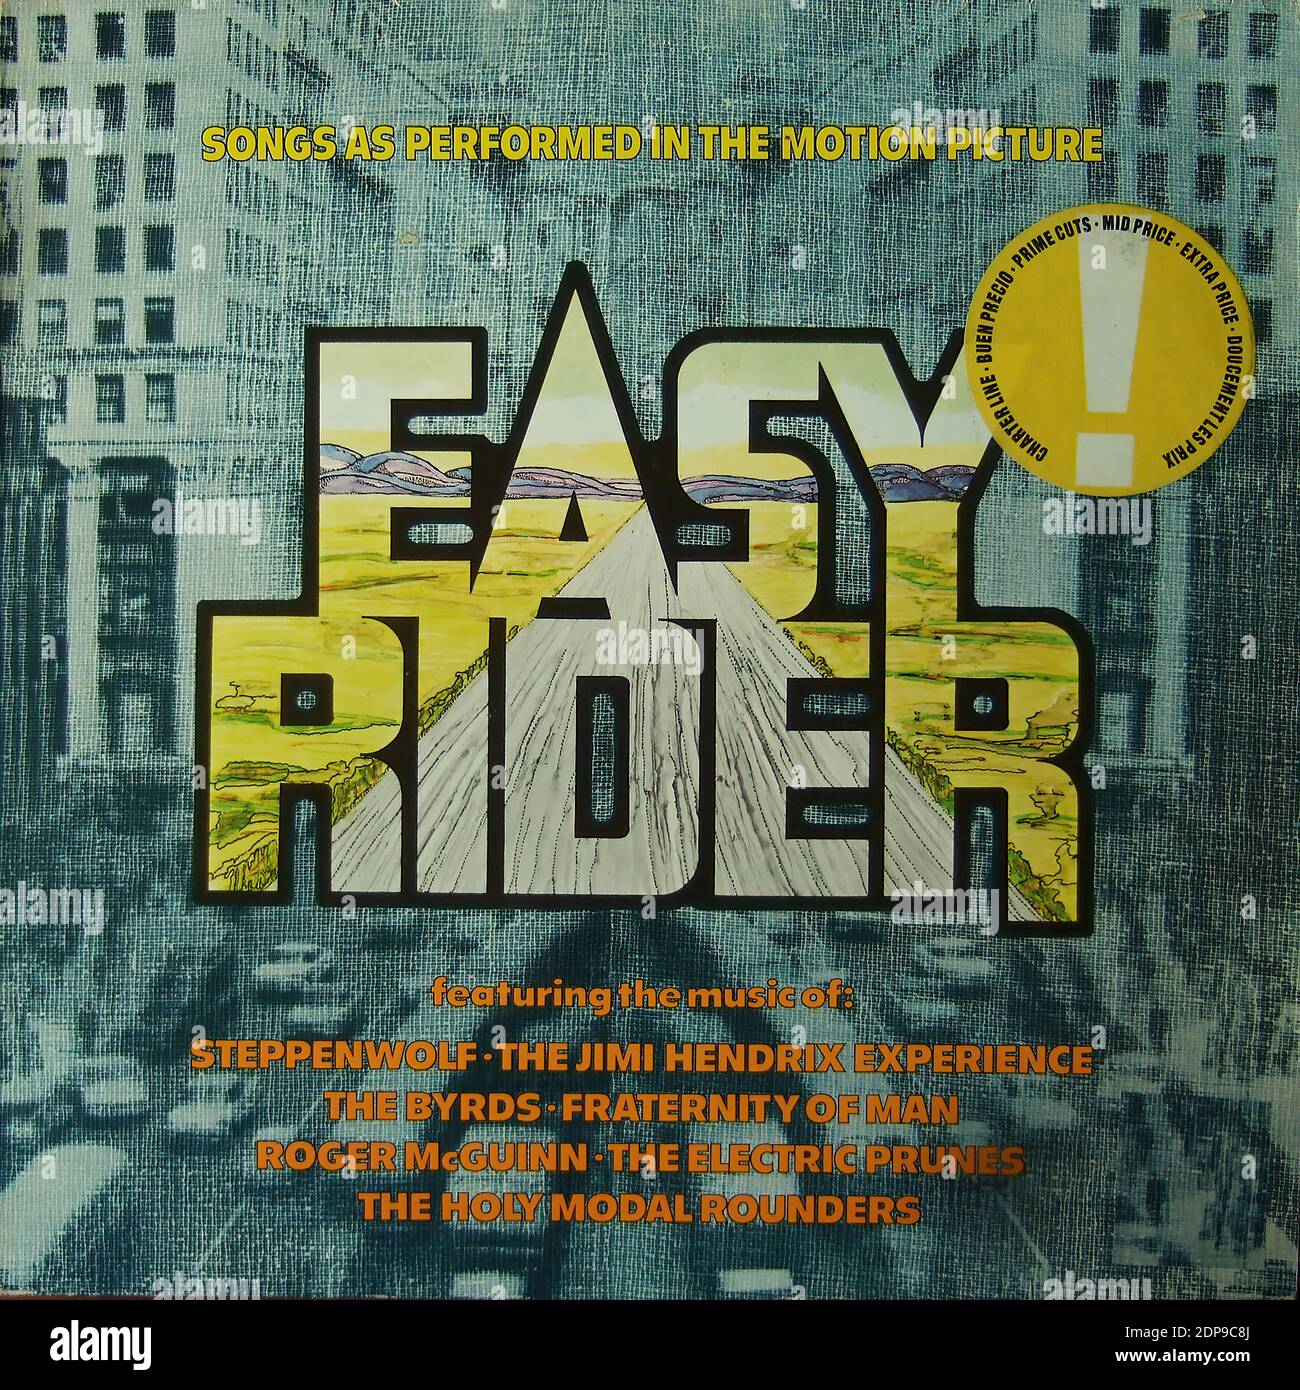 Easy Rider - Movie Soundtrack - Vintage vinyl album cover Stock Photo